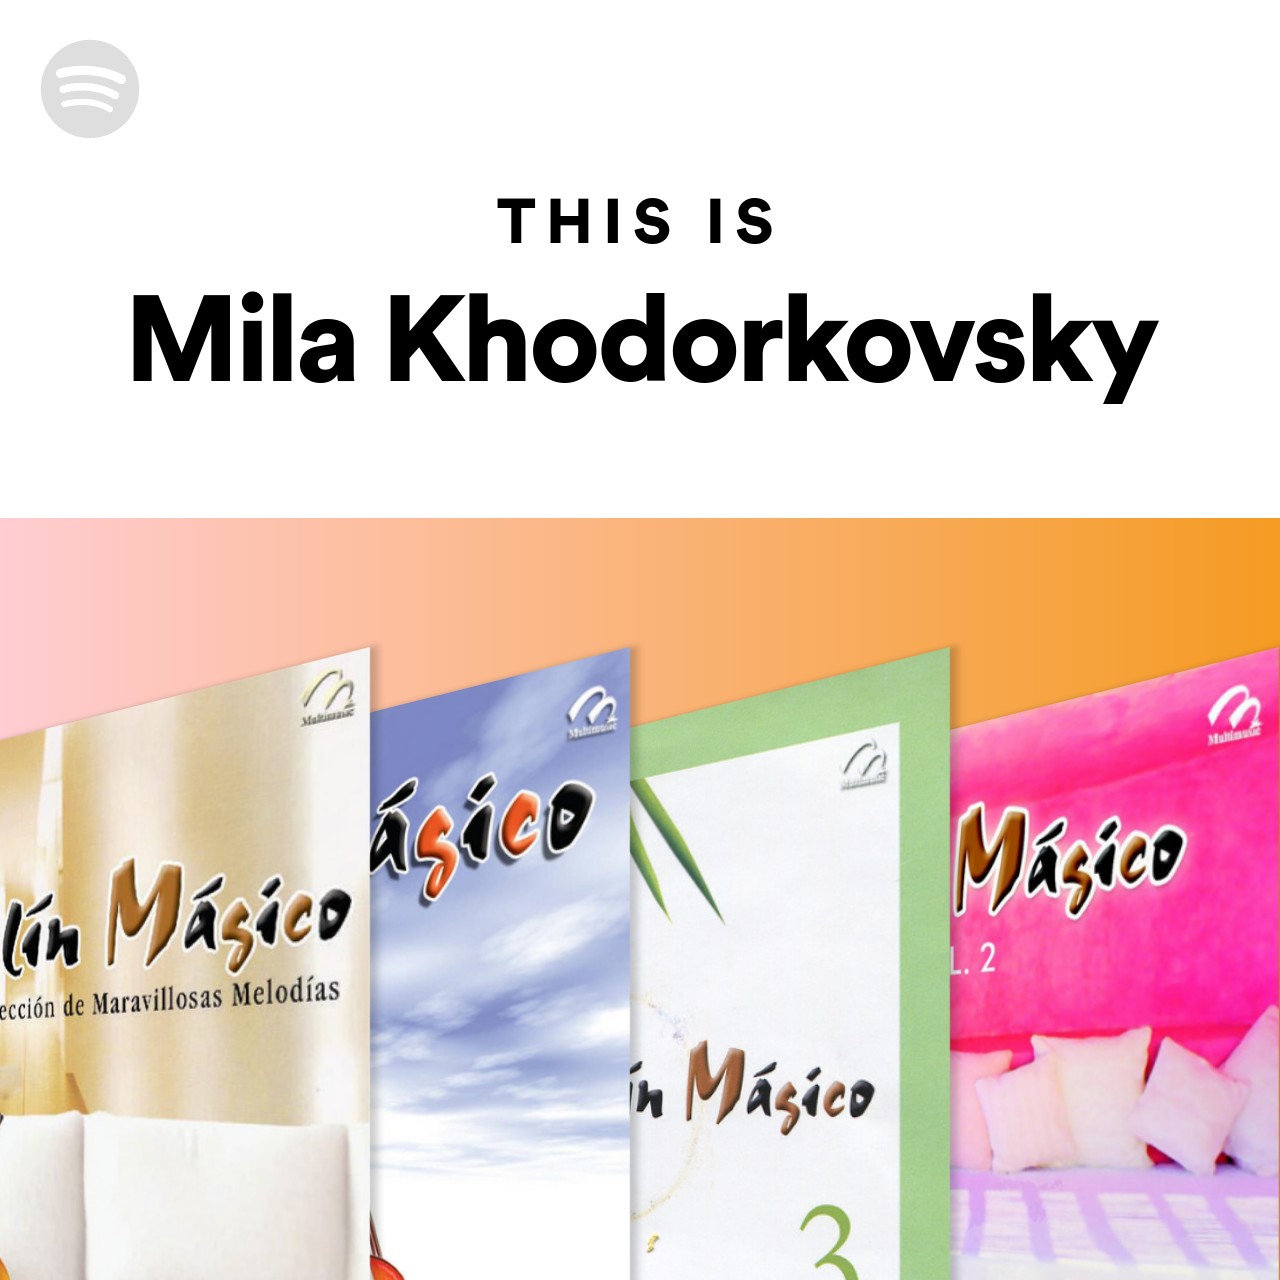 This Is Mila Khodorkovsky